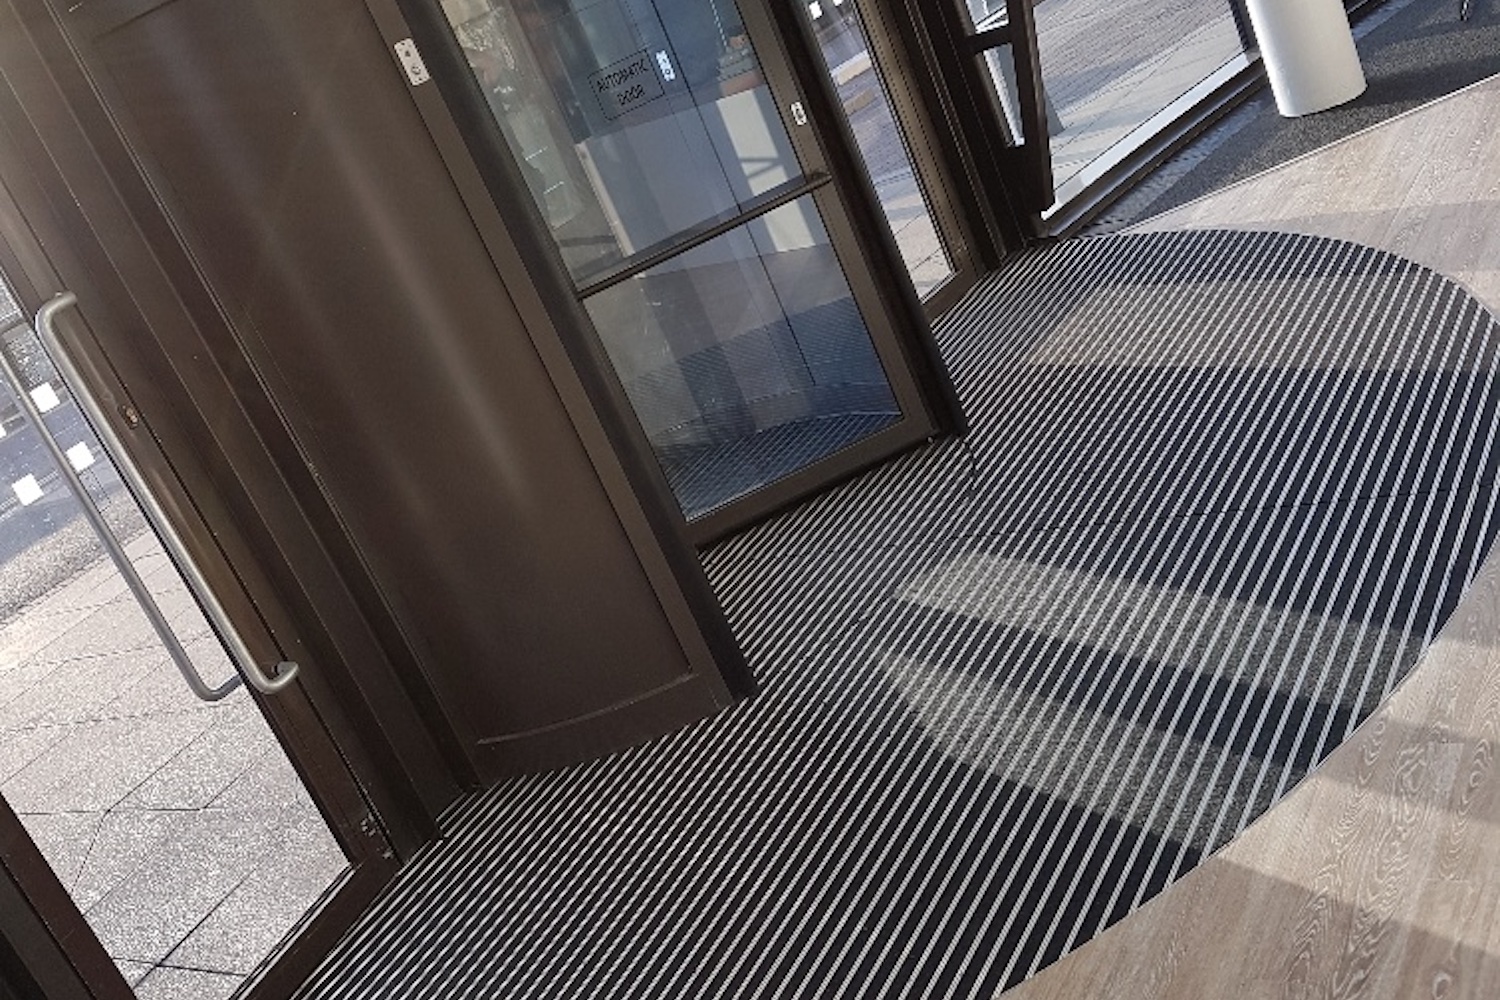 Paragon Carpet Tiles | MatWorks